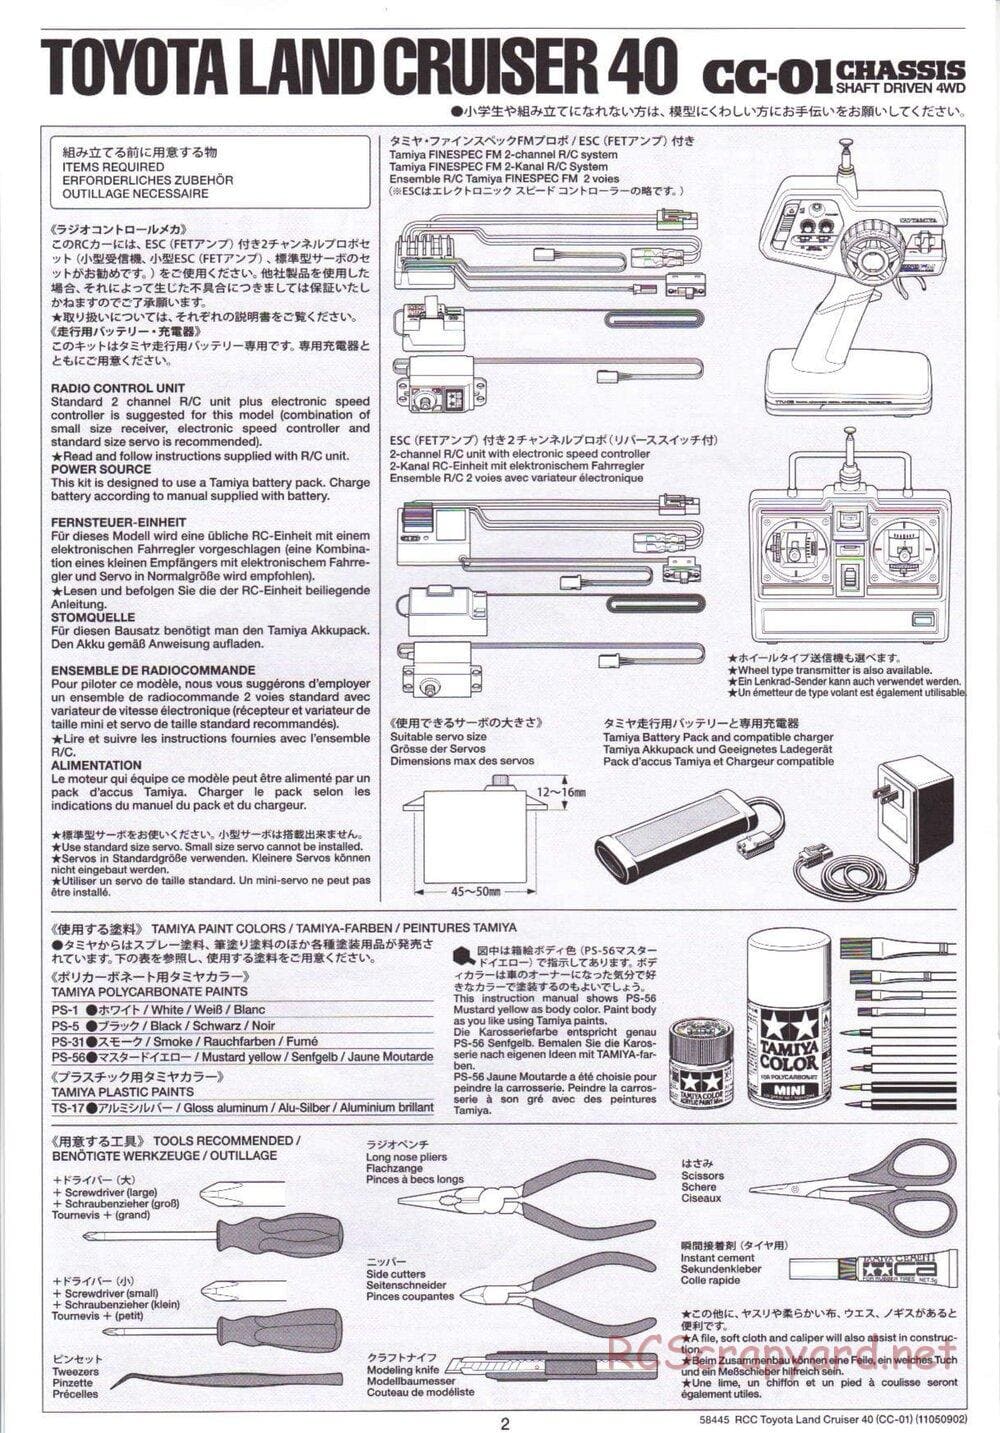 Tamiya - Toyota Land Cruiser 40 - CC-01 Chassis - Manual - Page 2